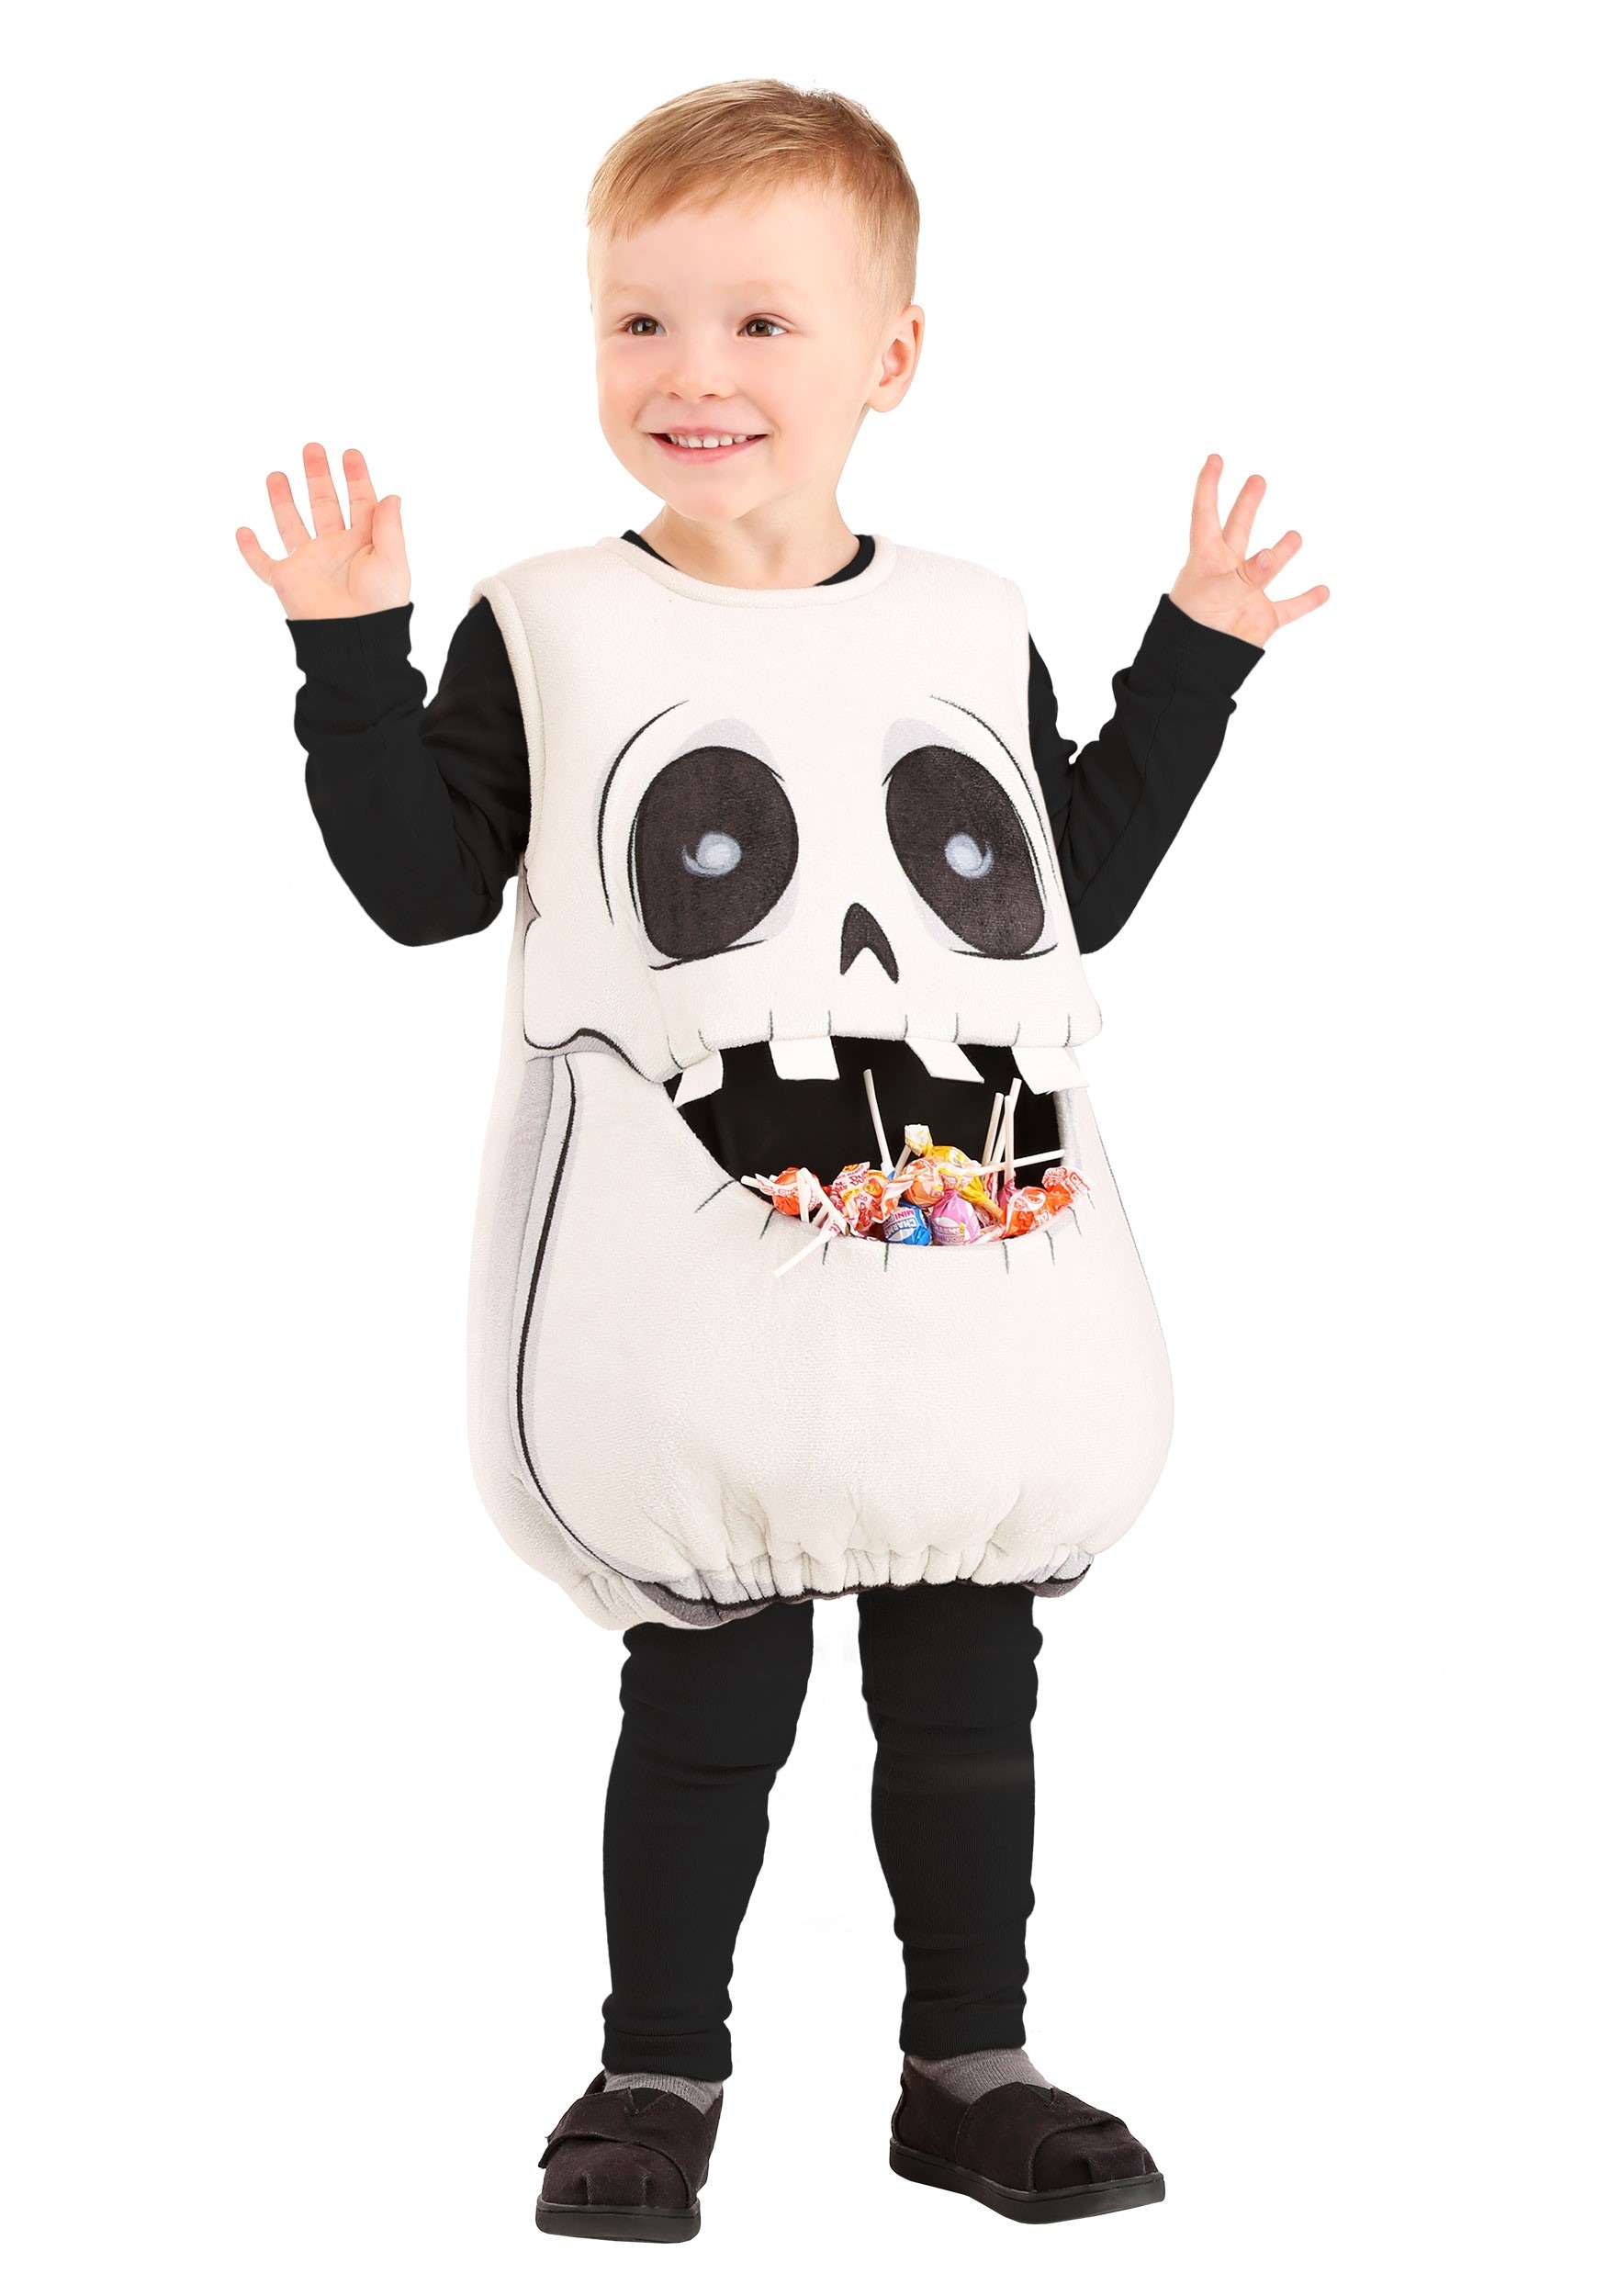 Feed Me Skeleton Costume for Kids